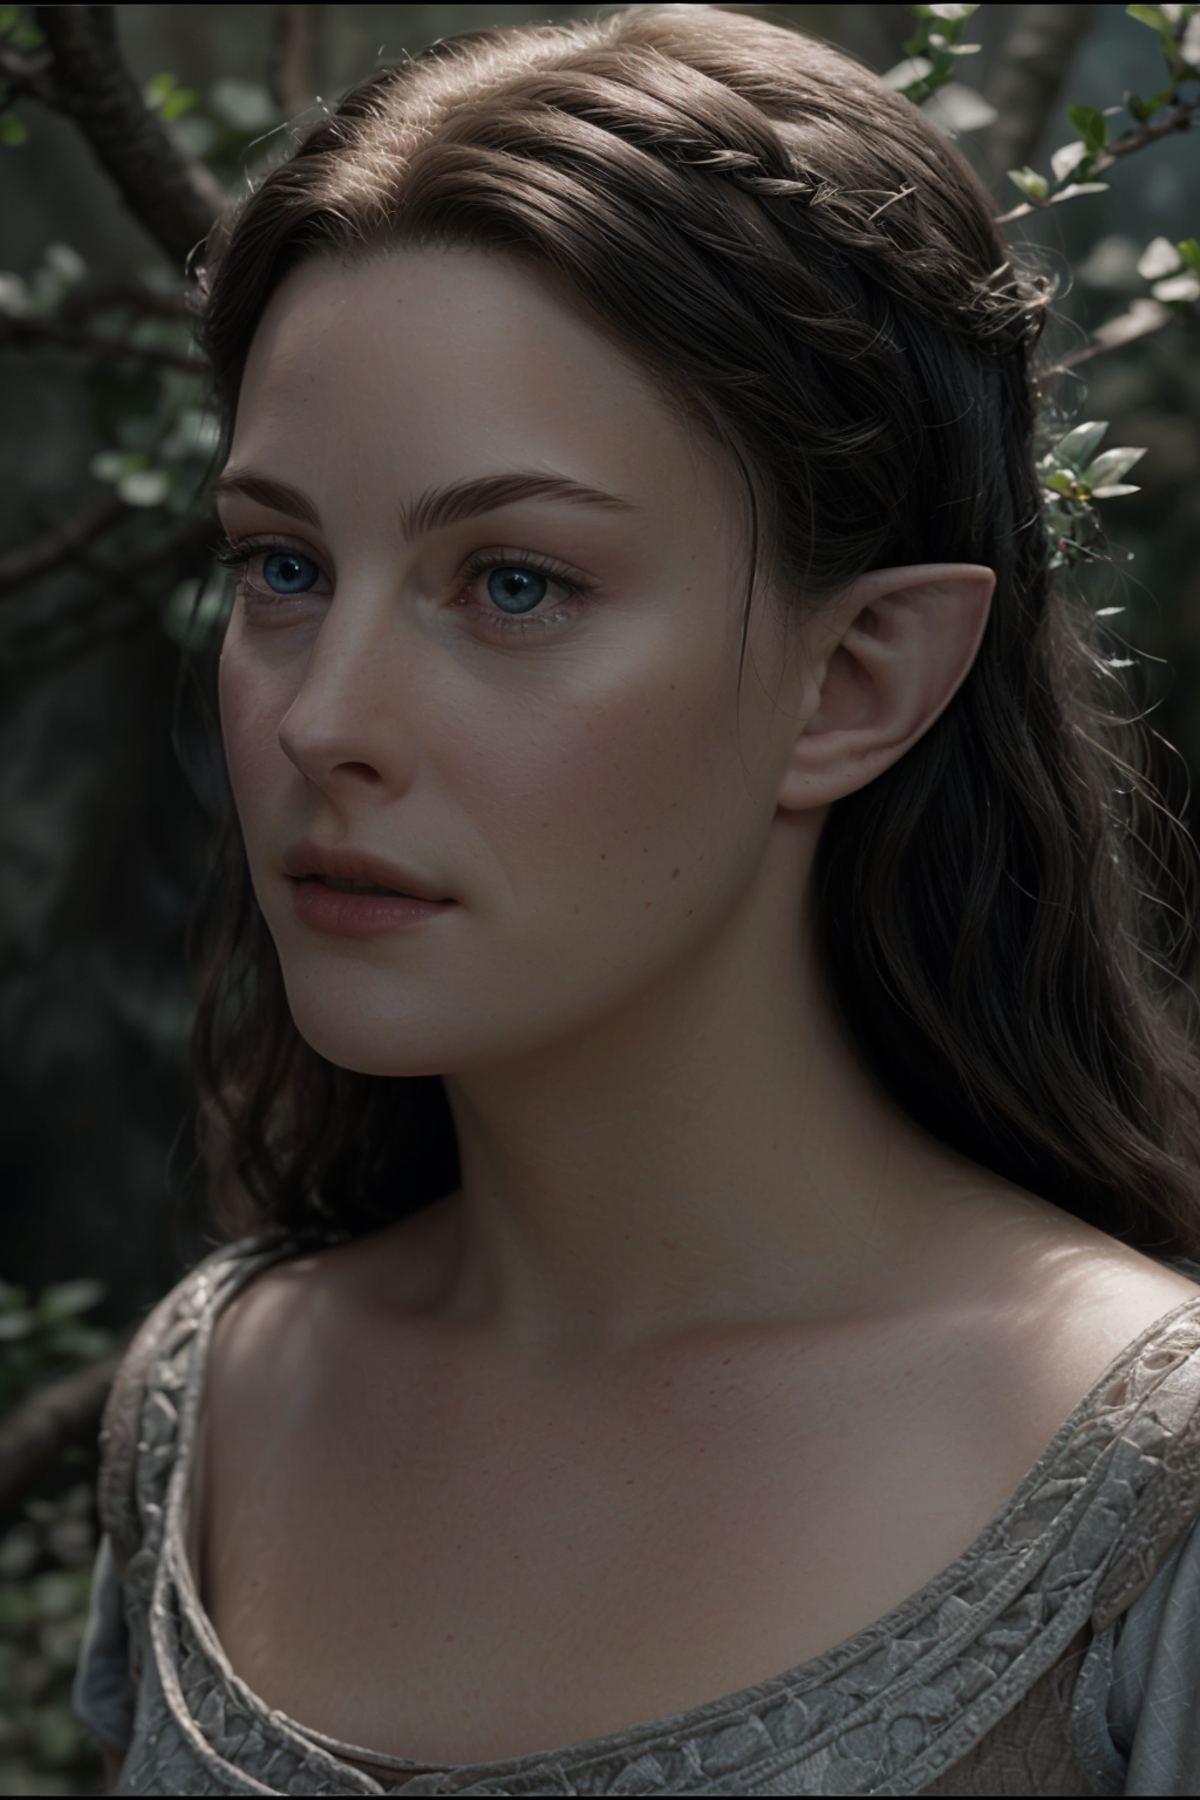 Arwen - Liv Tyler - Lord of the Rings image by Konan